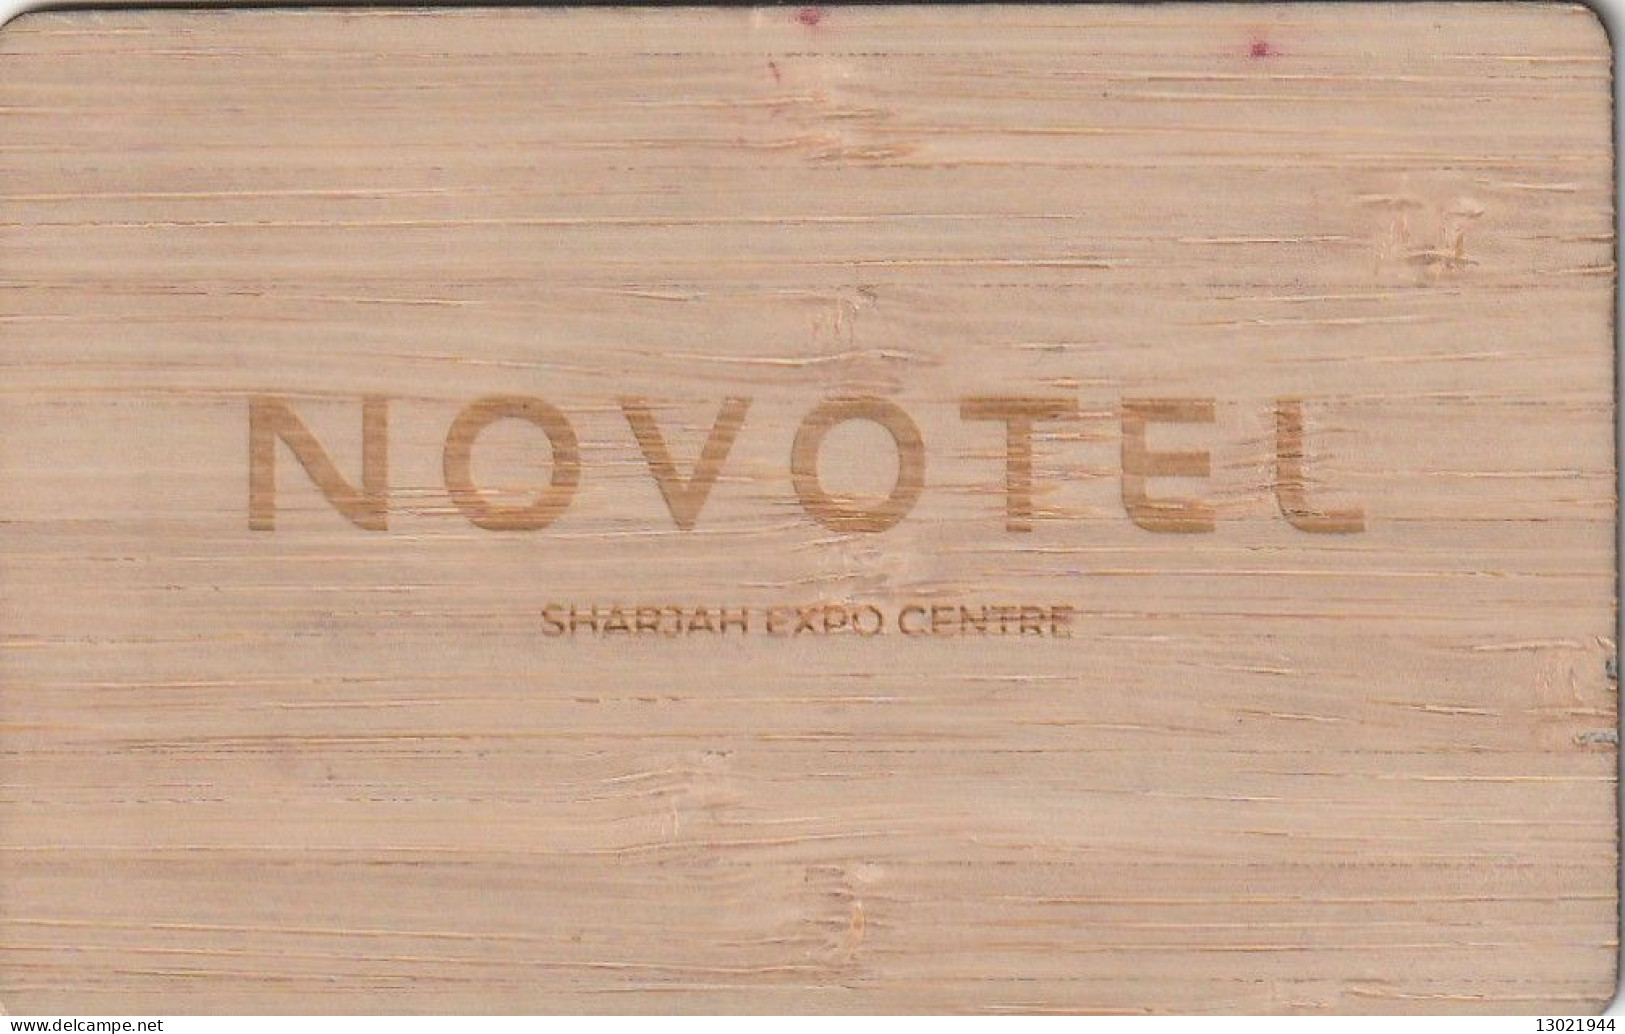 EMIRATI ARABI  KEY HOTEL      Novotel Sharjah Expo Centre -  Wooden Card. - Hotel Keycards